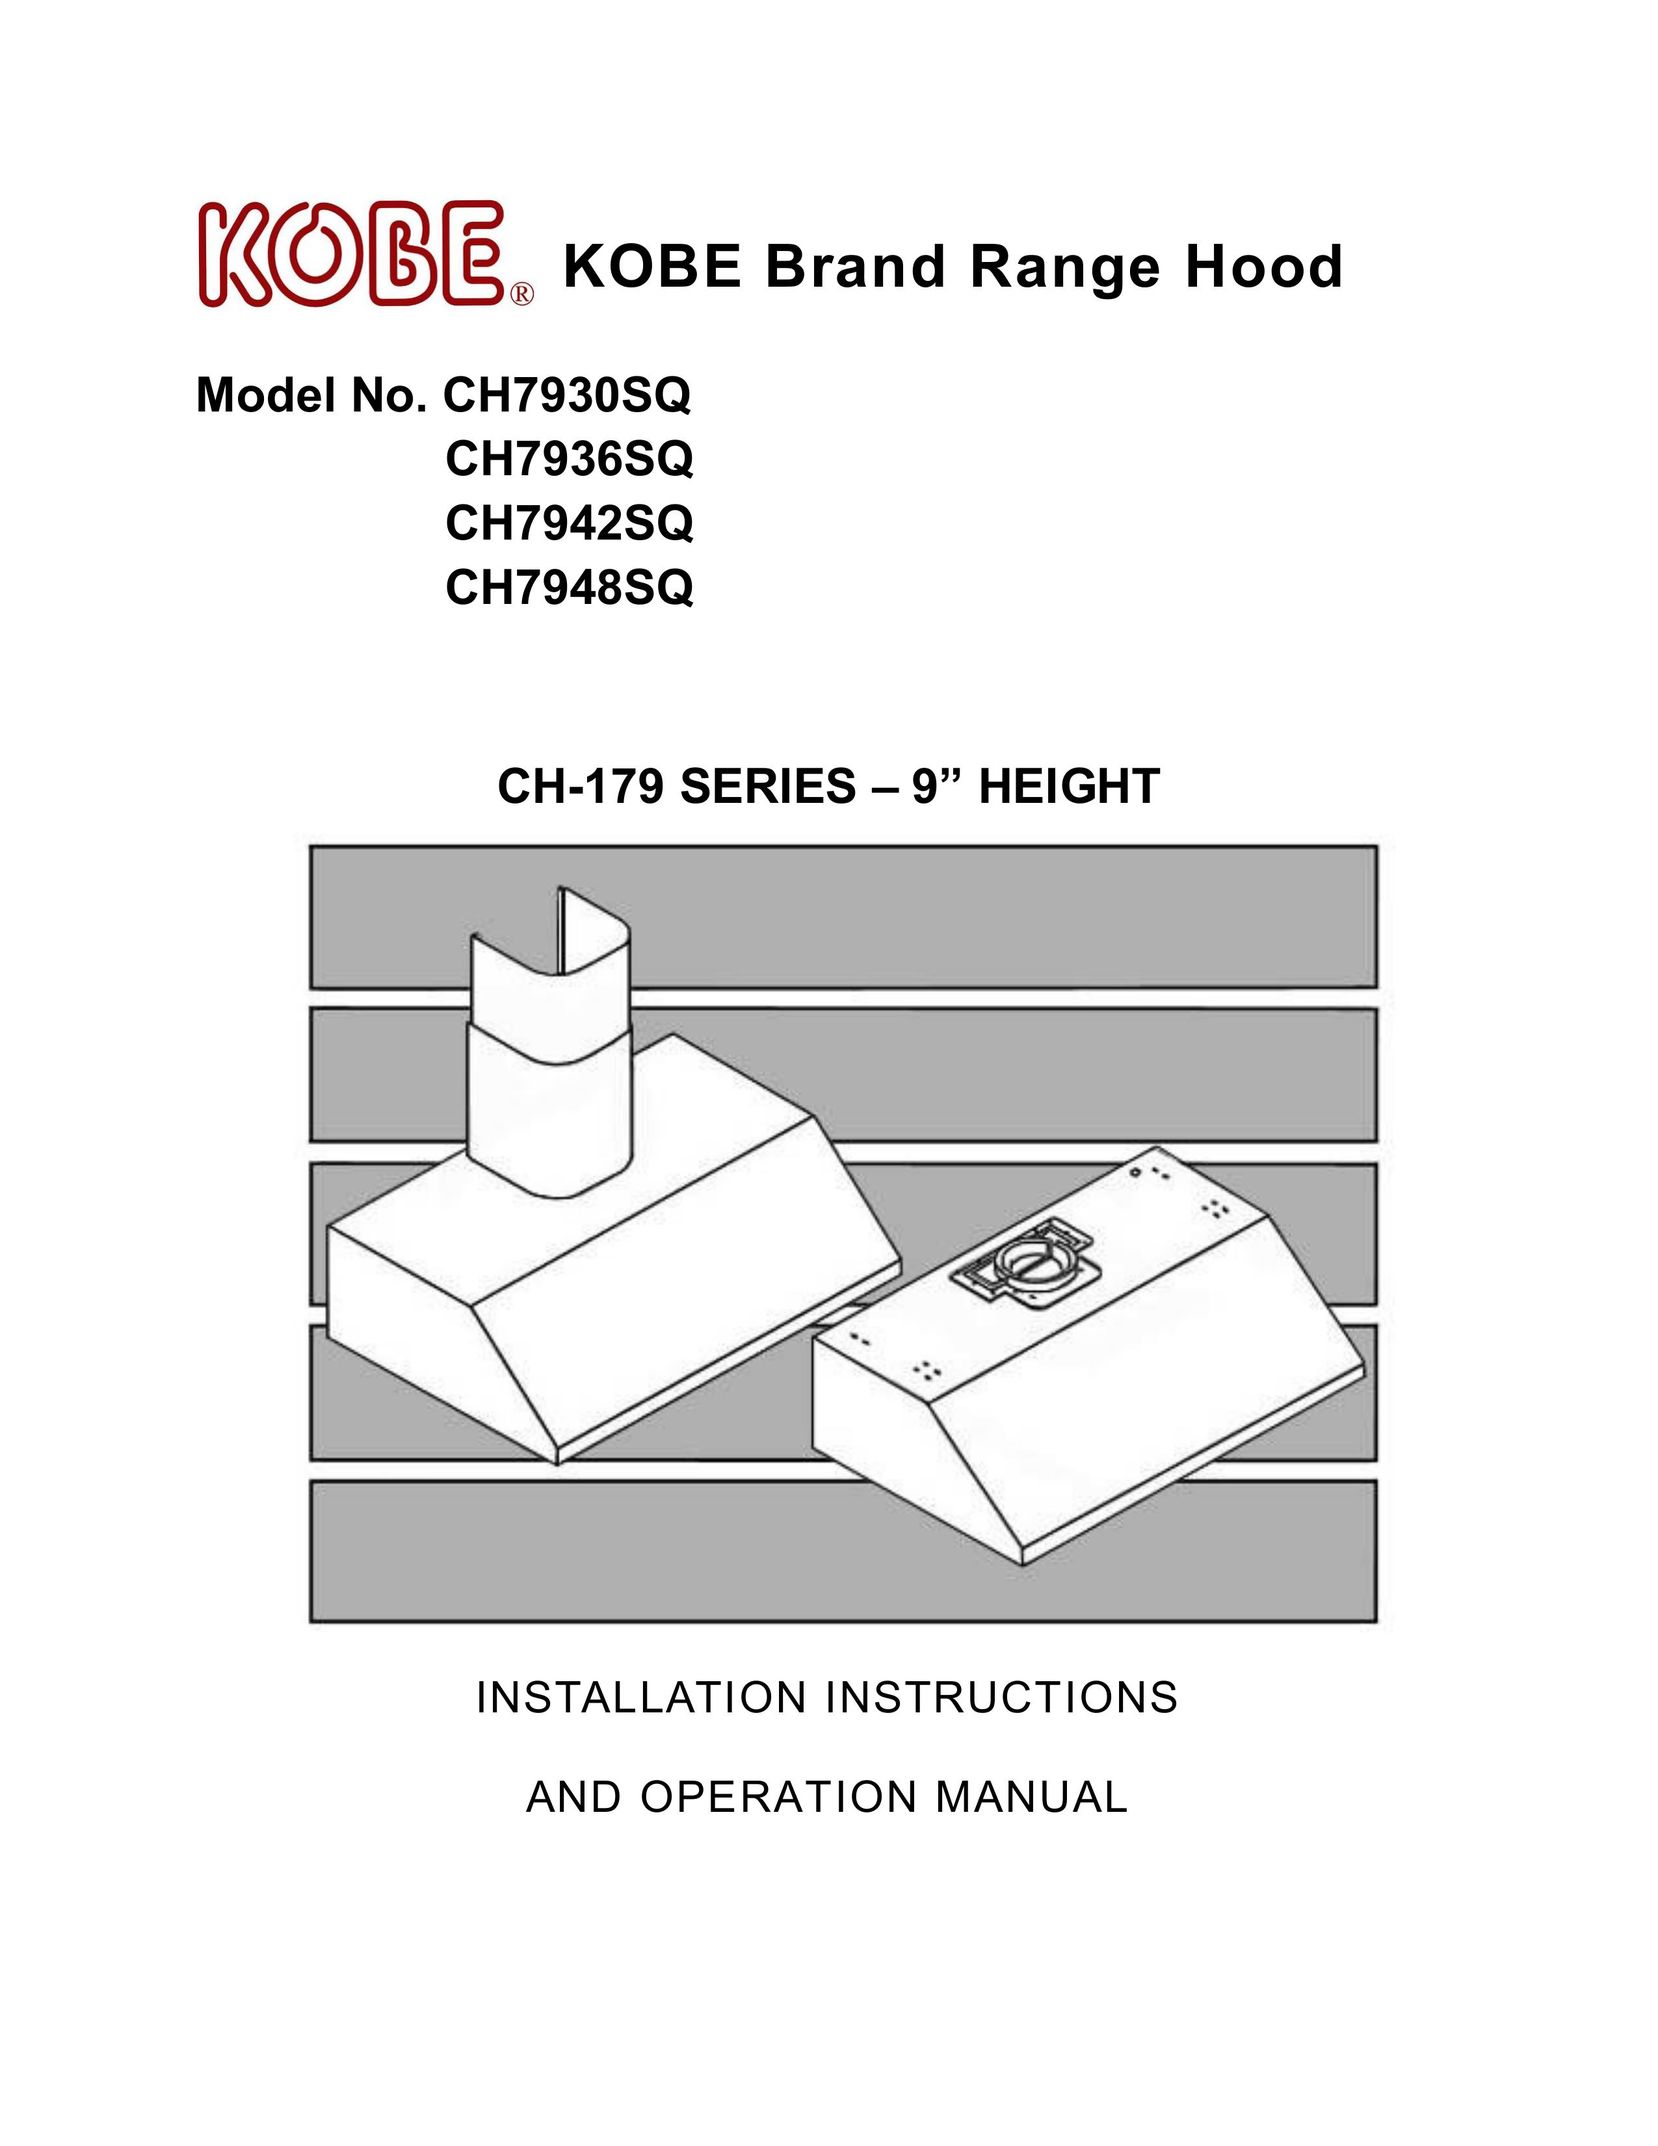 Kobe Range Hoods CH7936SQ Range User Manual